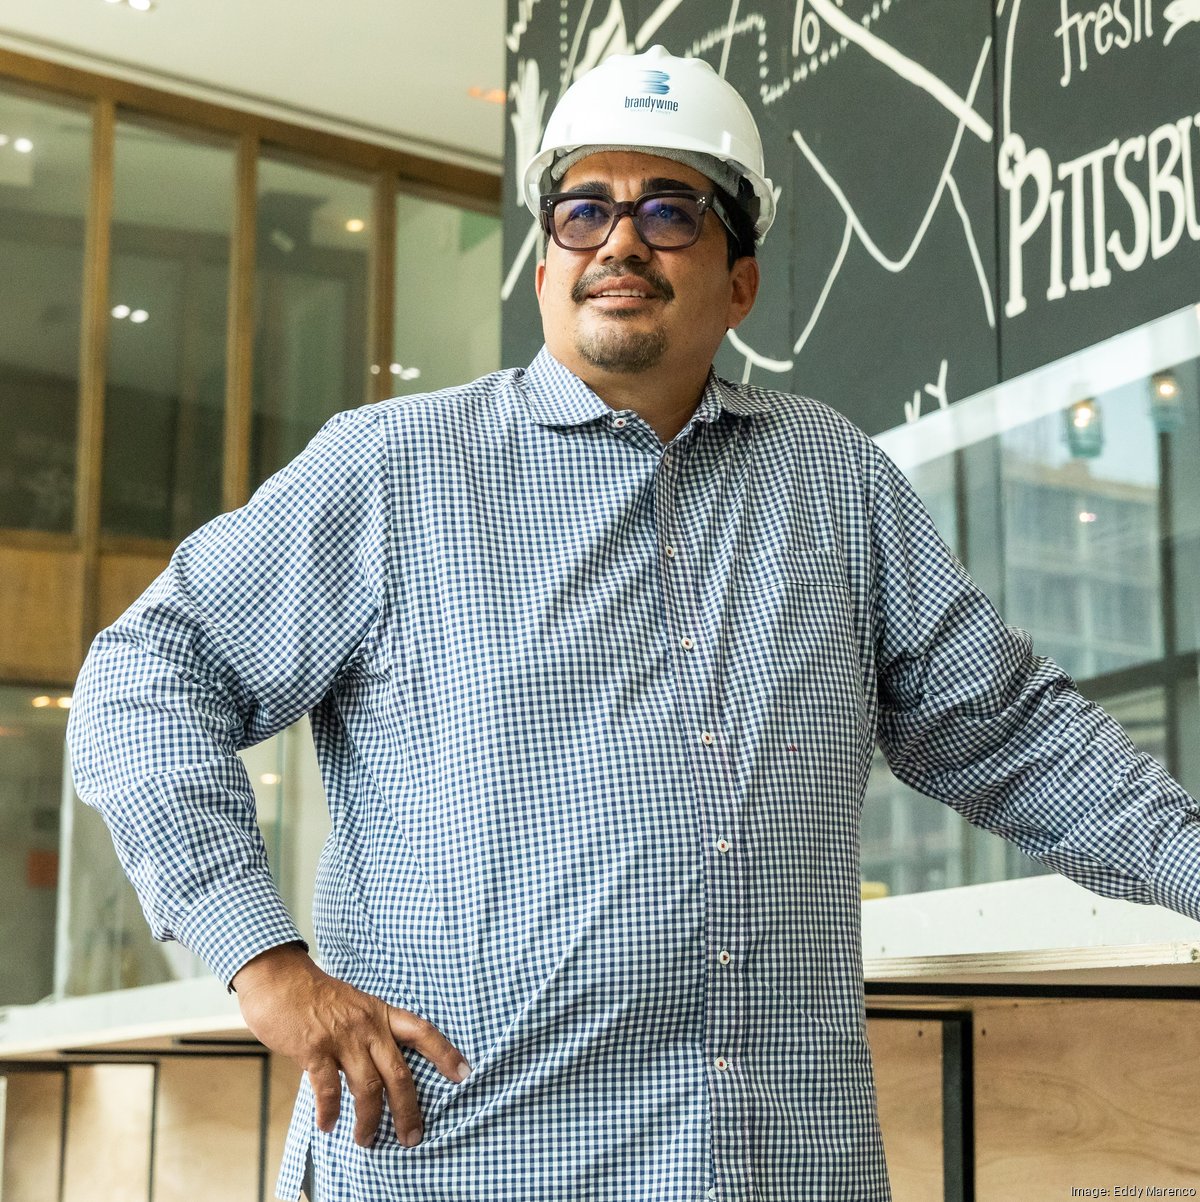 Iron Chef Jose Garces To Open New Restaurant In Wells Fargo Center